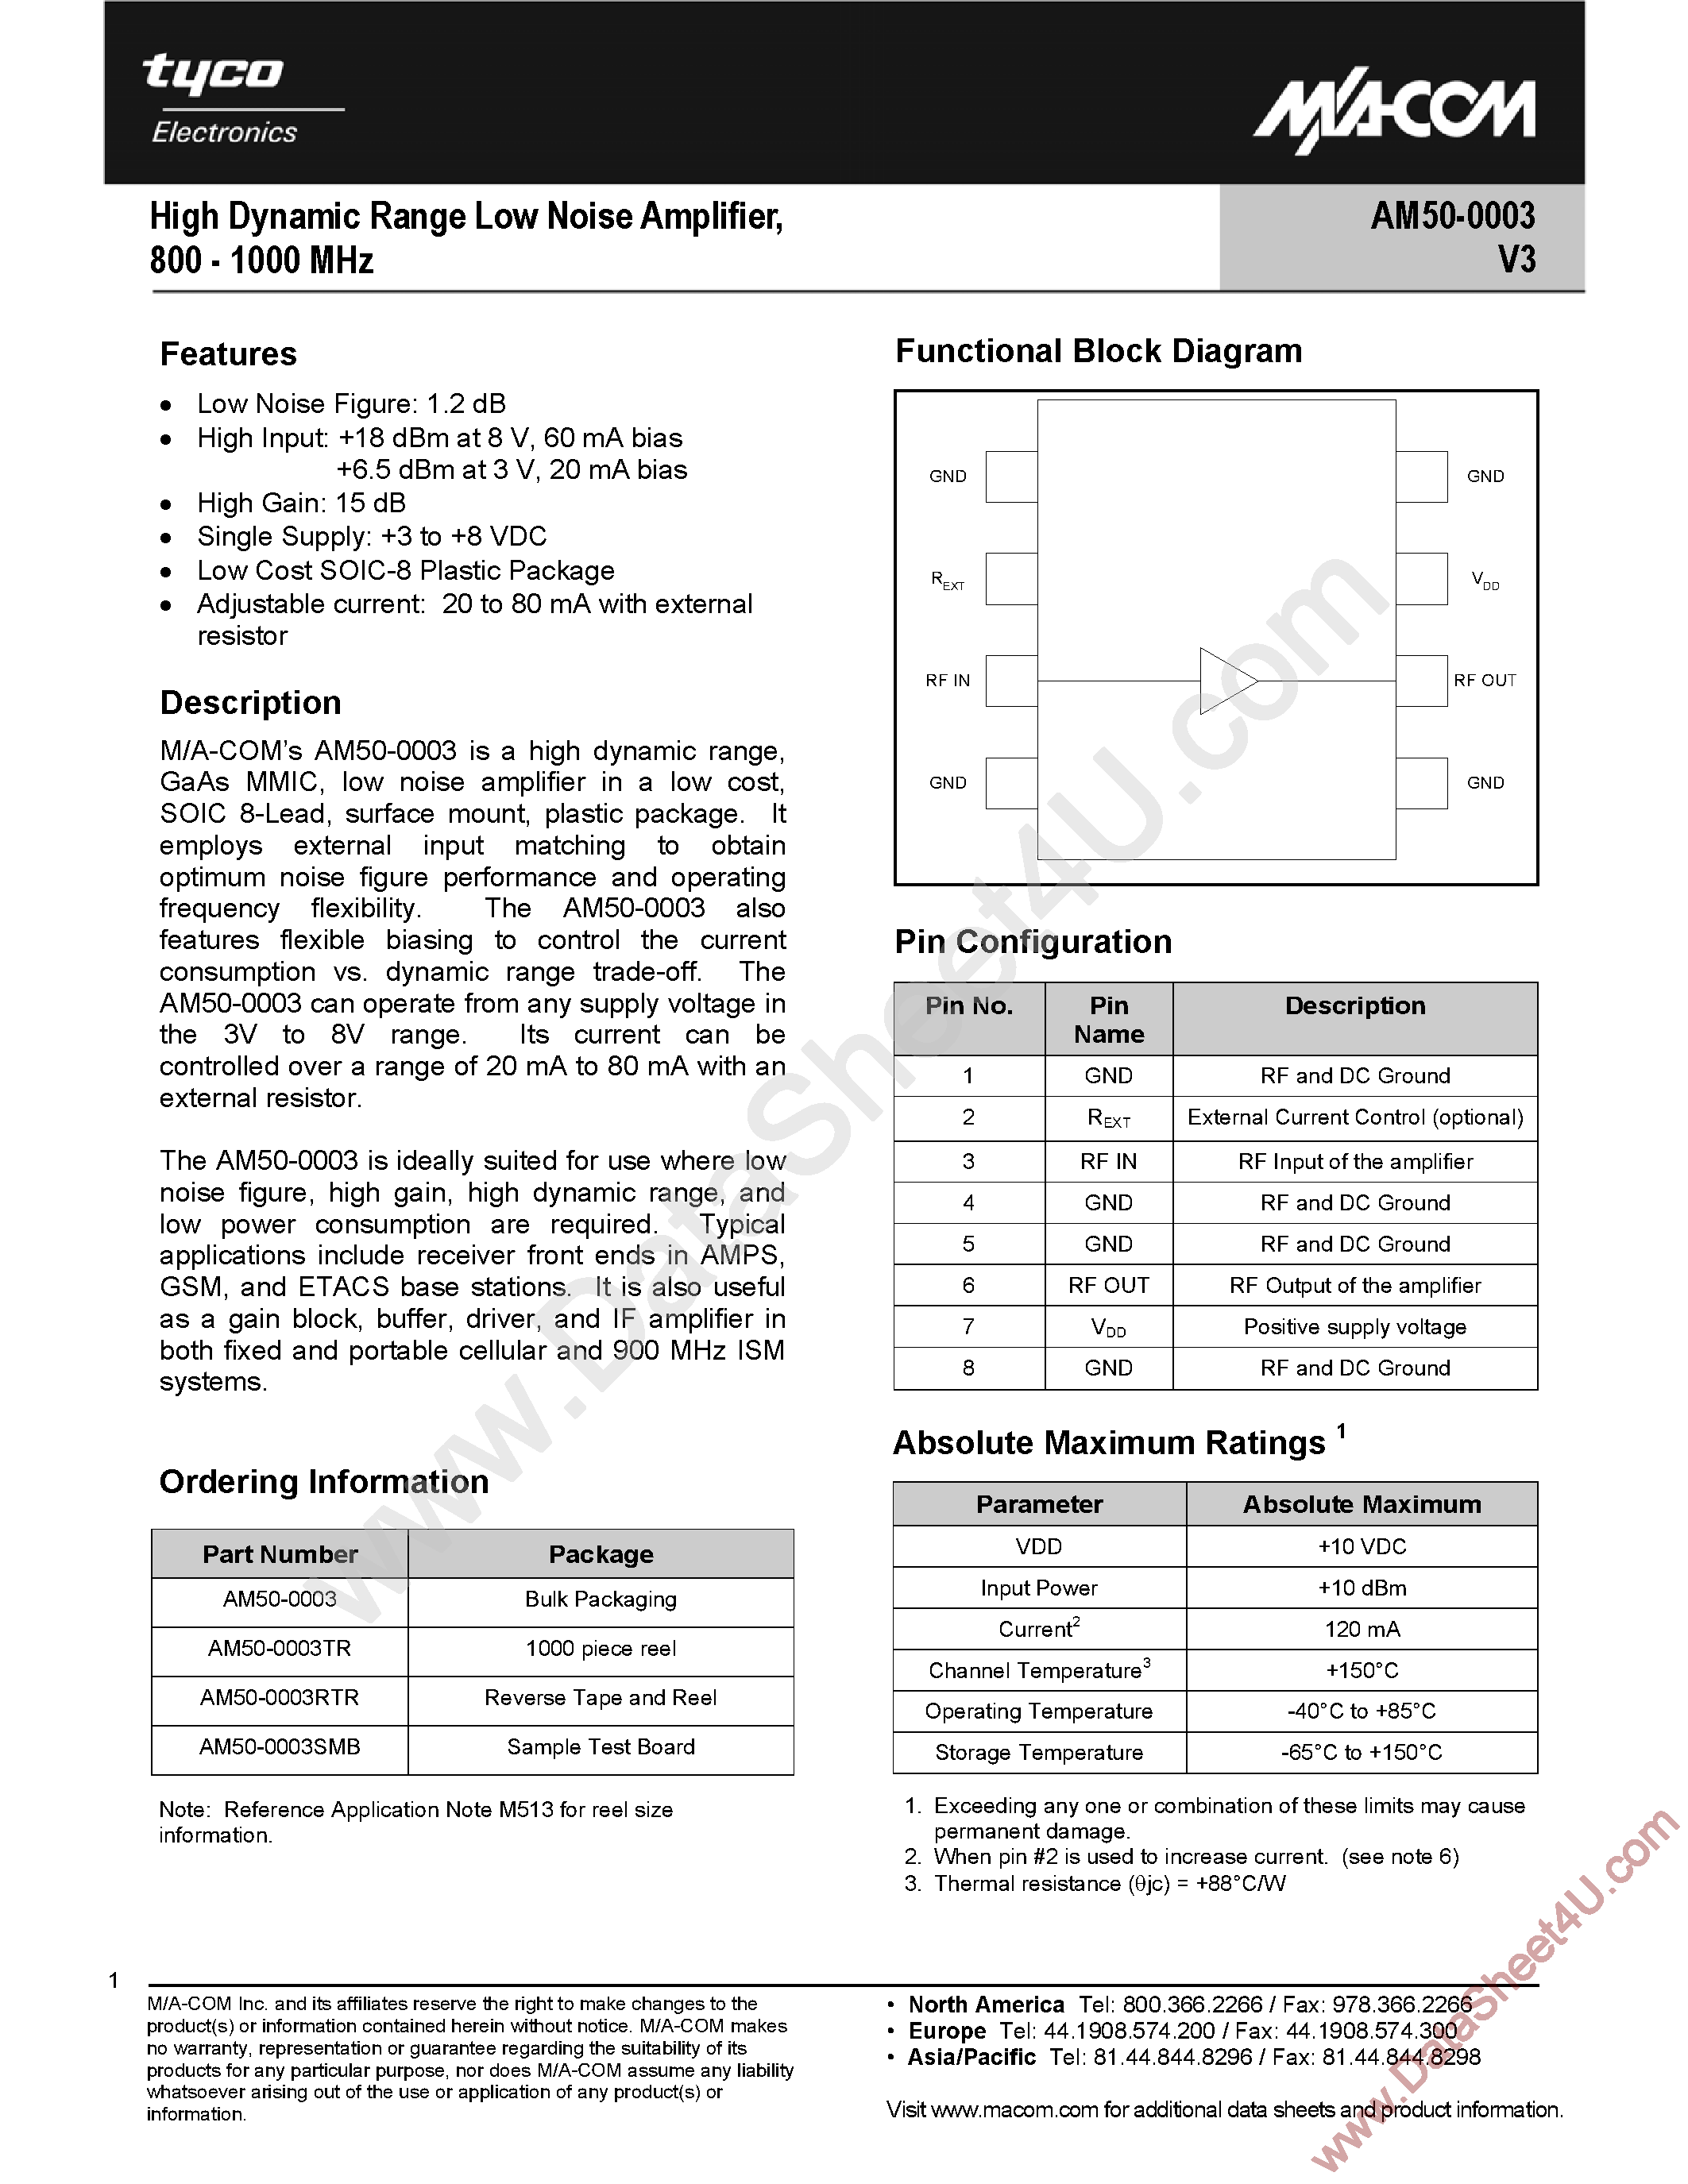 Даташит AM50-0003V3 - High Dynamic Range Low Noise Amplifier страница 1